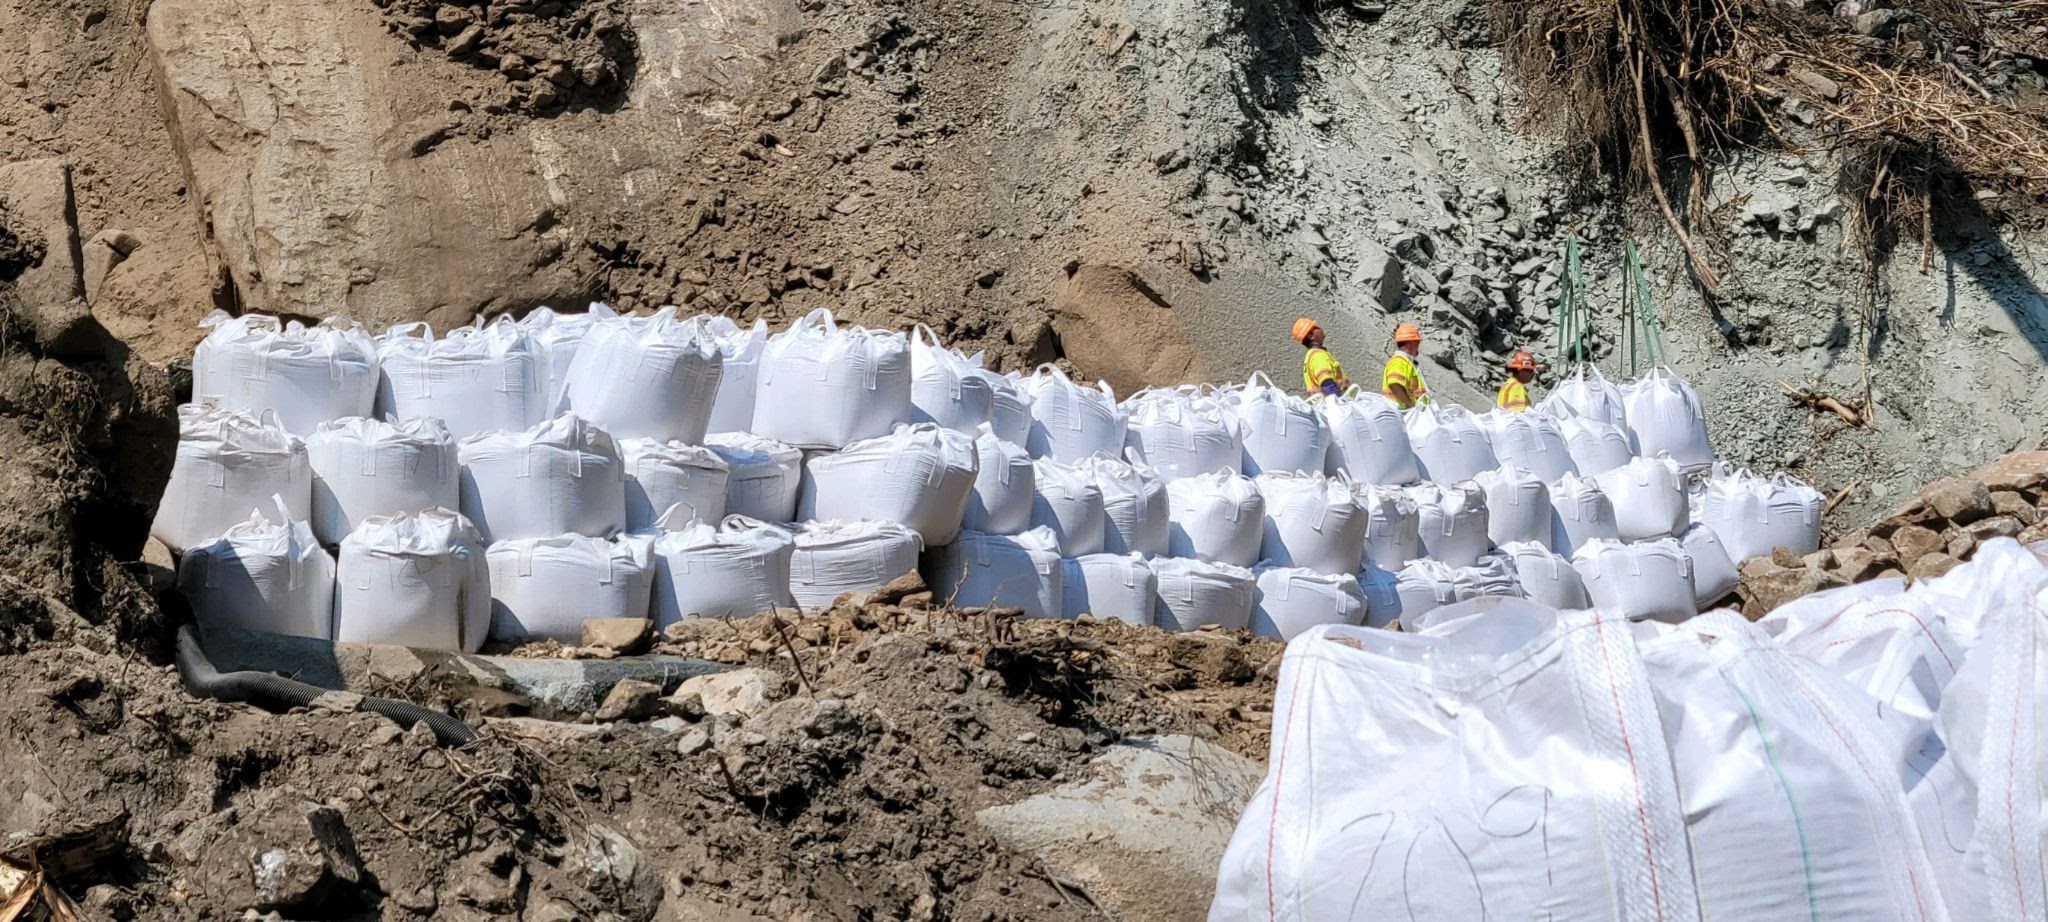 Super sacks along the roadway of I-70 in Glenwood Canyon detail image